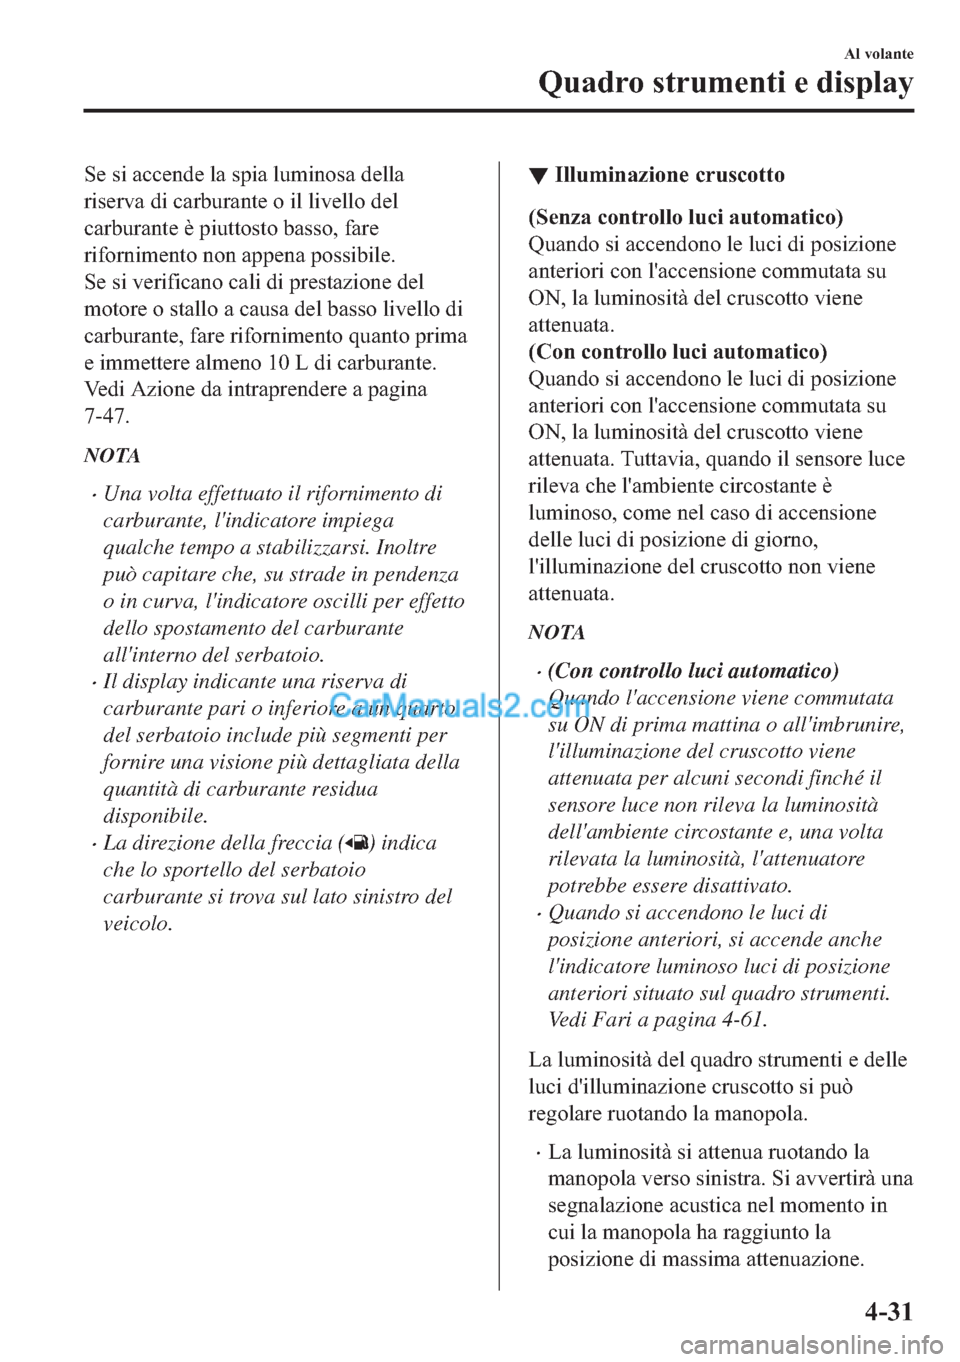 MAZDA MODEL 2 2019  Manuale del proprietario (in Italian) �6�H��V�L��D�F�F�H�Q�G�H��O�D��V�S�L�D��O�X�P�L�Q�R�V�D��G�H�O�O�D
�U�L�V�H�U�Y�D��G�L��F�D�U�E�X�U�D�Q�W�H��R��L�O��O�L�Y�H�O�O�R��G�H�O
�F�D�U�E�X�U�D�Q�W�H��q��S�L�X�W�W�R�V�W�R��E�D